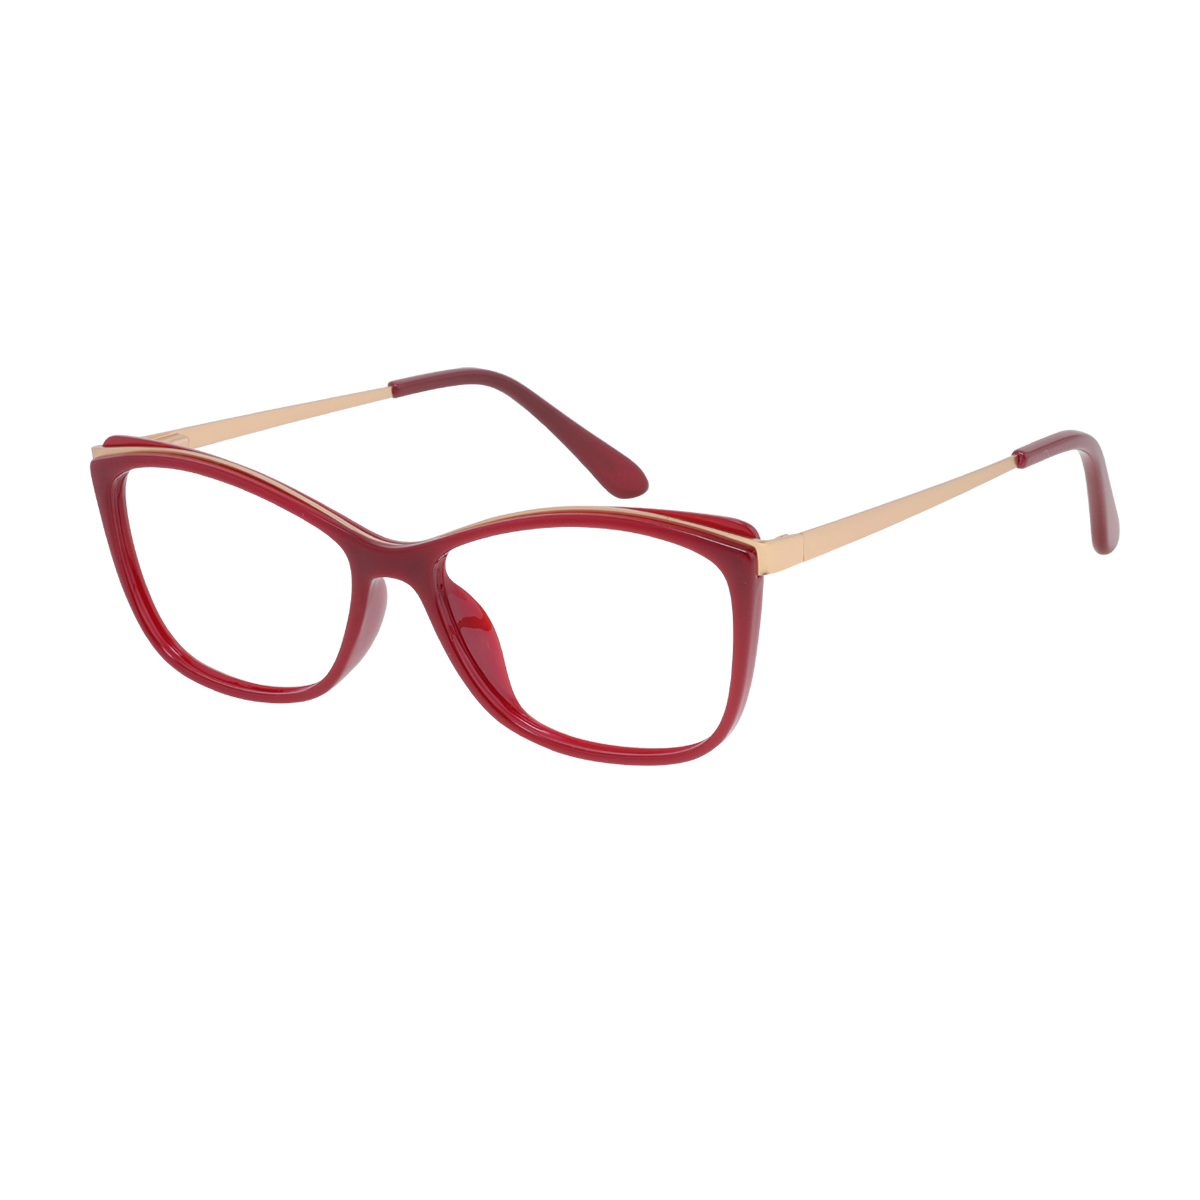 Gela - Rectangle Red-gold Reading Glasses for Women